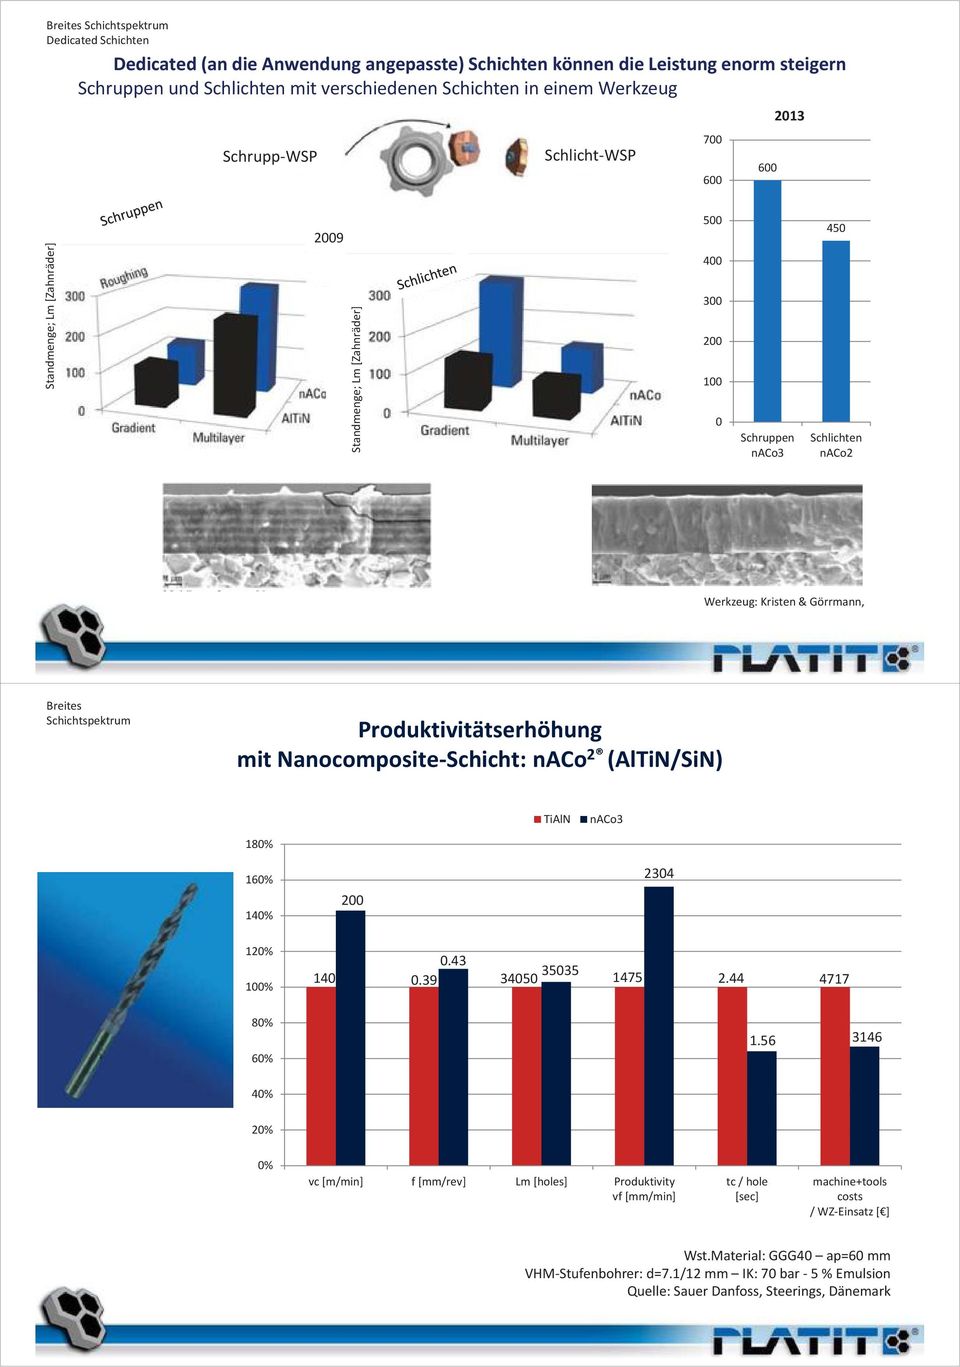 mit Nanocomposite-Schicht: naco (AlTiN/SiN) TiAlN naco 8% 6% % % %..9 7. 77 8% 6%.